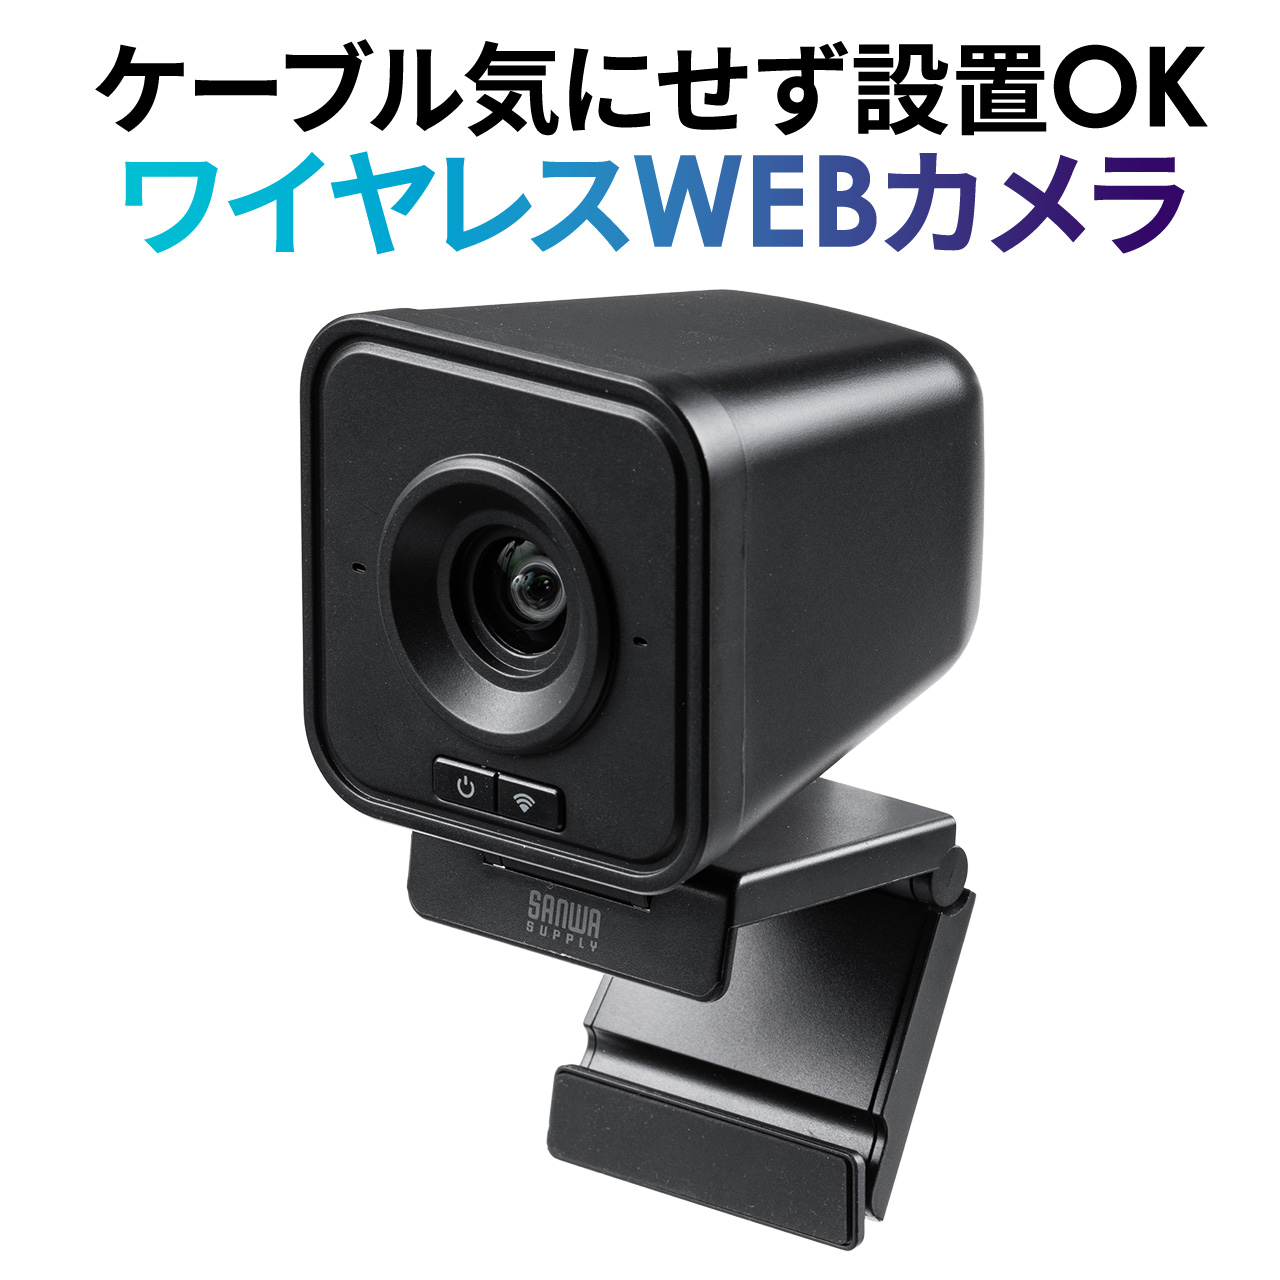 WEBカメラ ワイヤレス 無線接続 広角レンズ搭載 2.4GHz フルHD 200万画素 ドライバー不要 Zoom対応 三脚 ウェブカメラ パソコンカメラ 外付け 400-CAM102